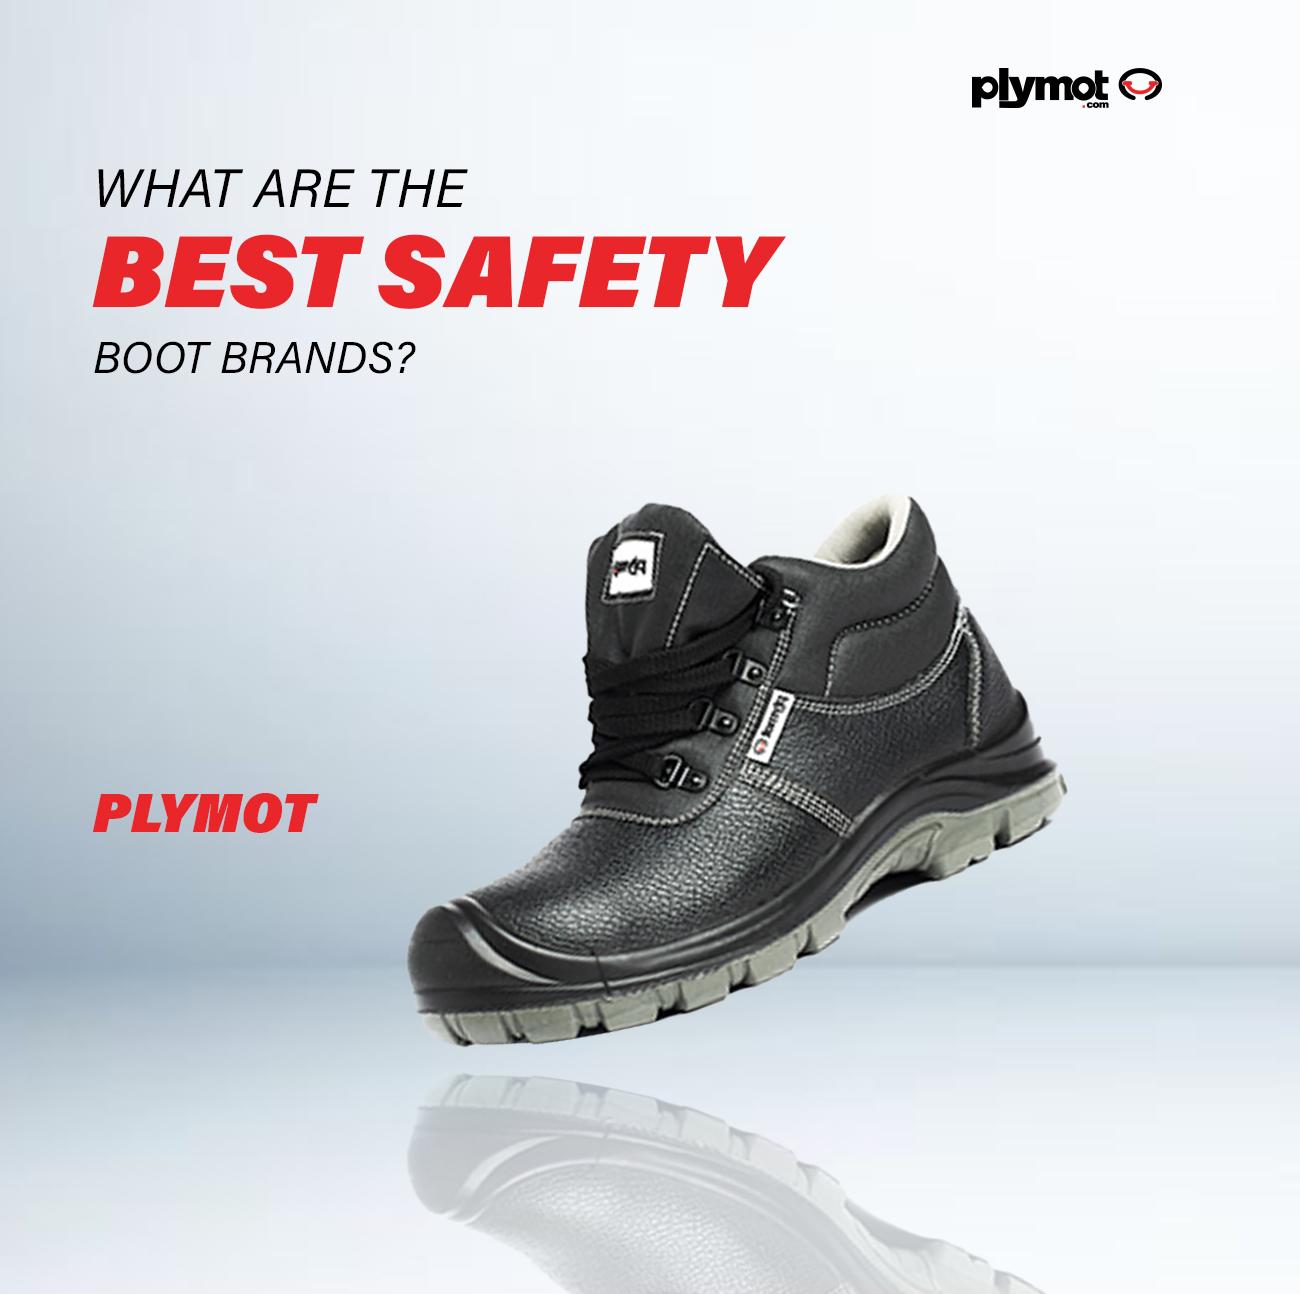 Plymot safety boot brand